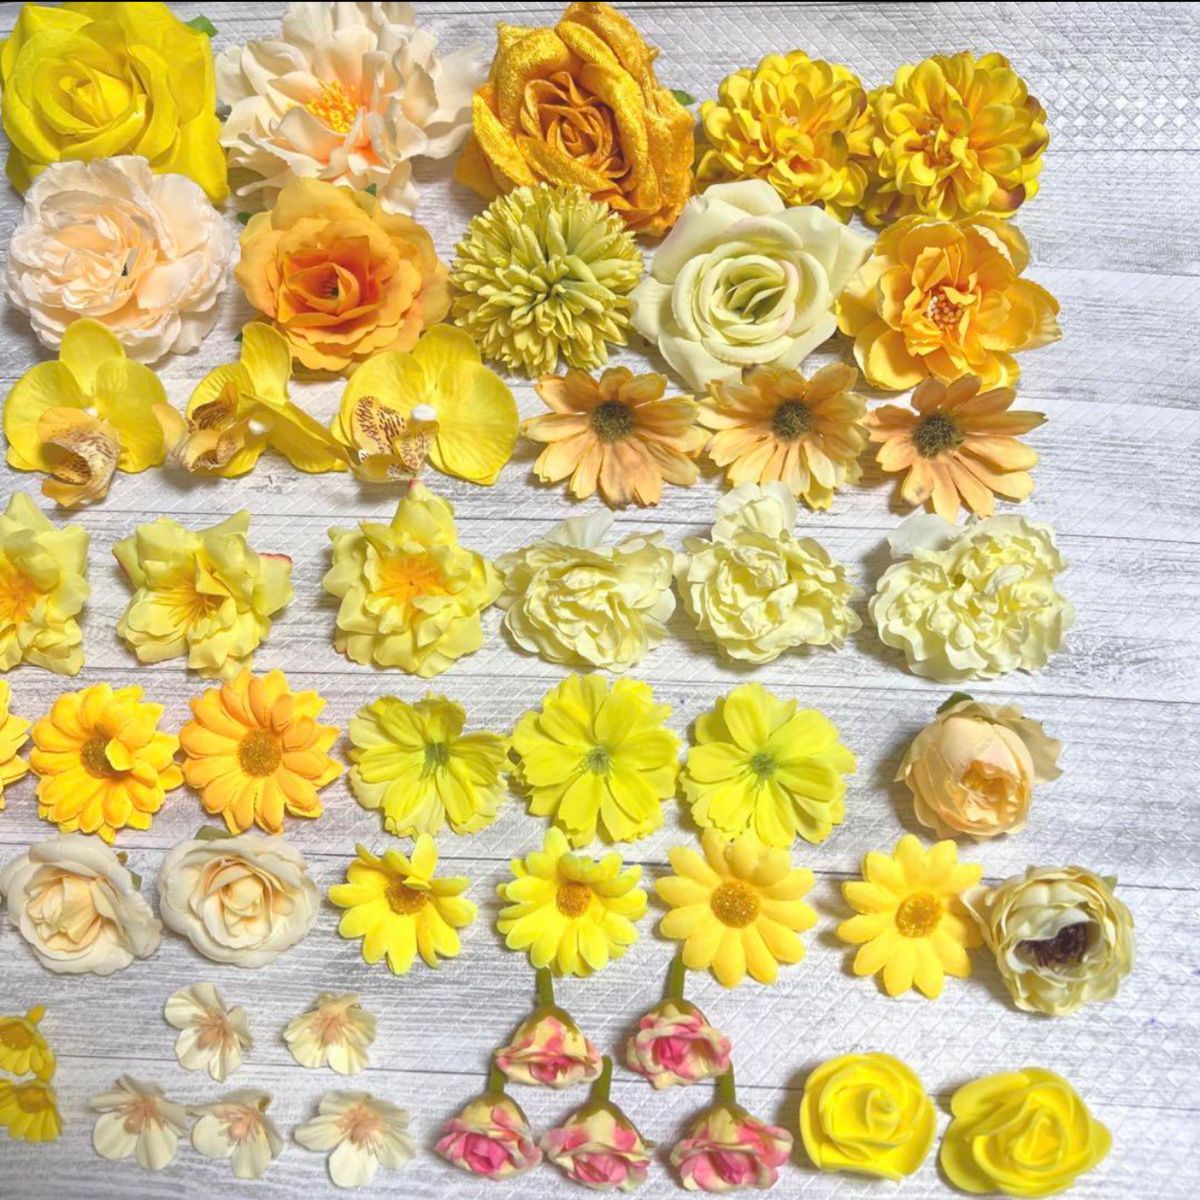 NO 0910-03 造花 花材 まとめ売り ハンドメイド 素材 セット 花 アーティフィシャルフラワー リース 黄色いバラ